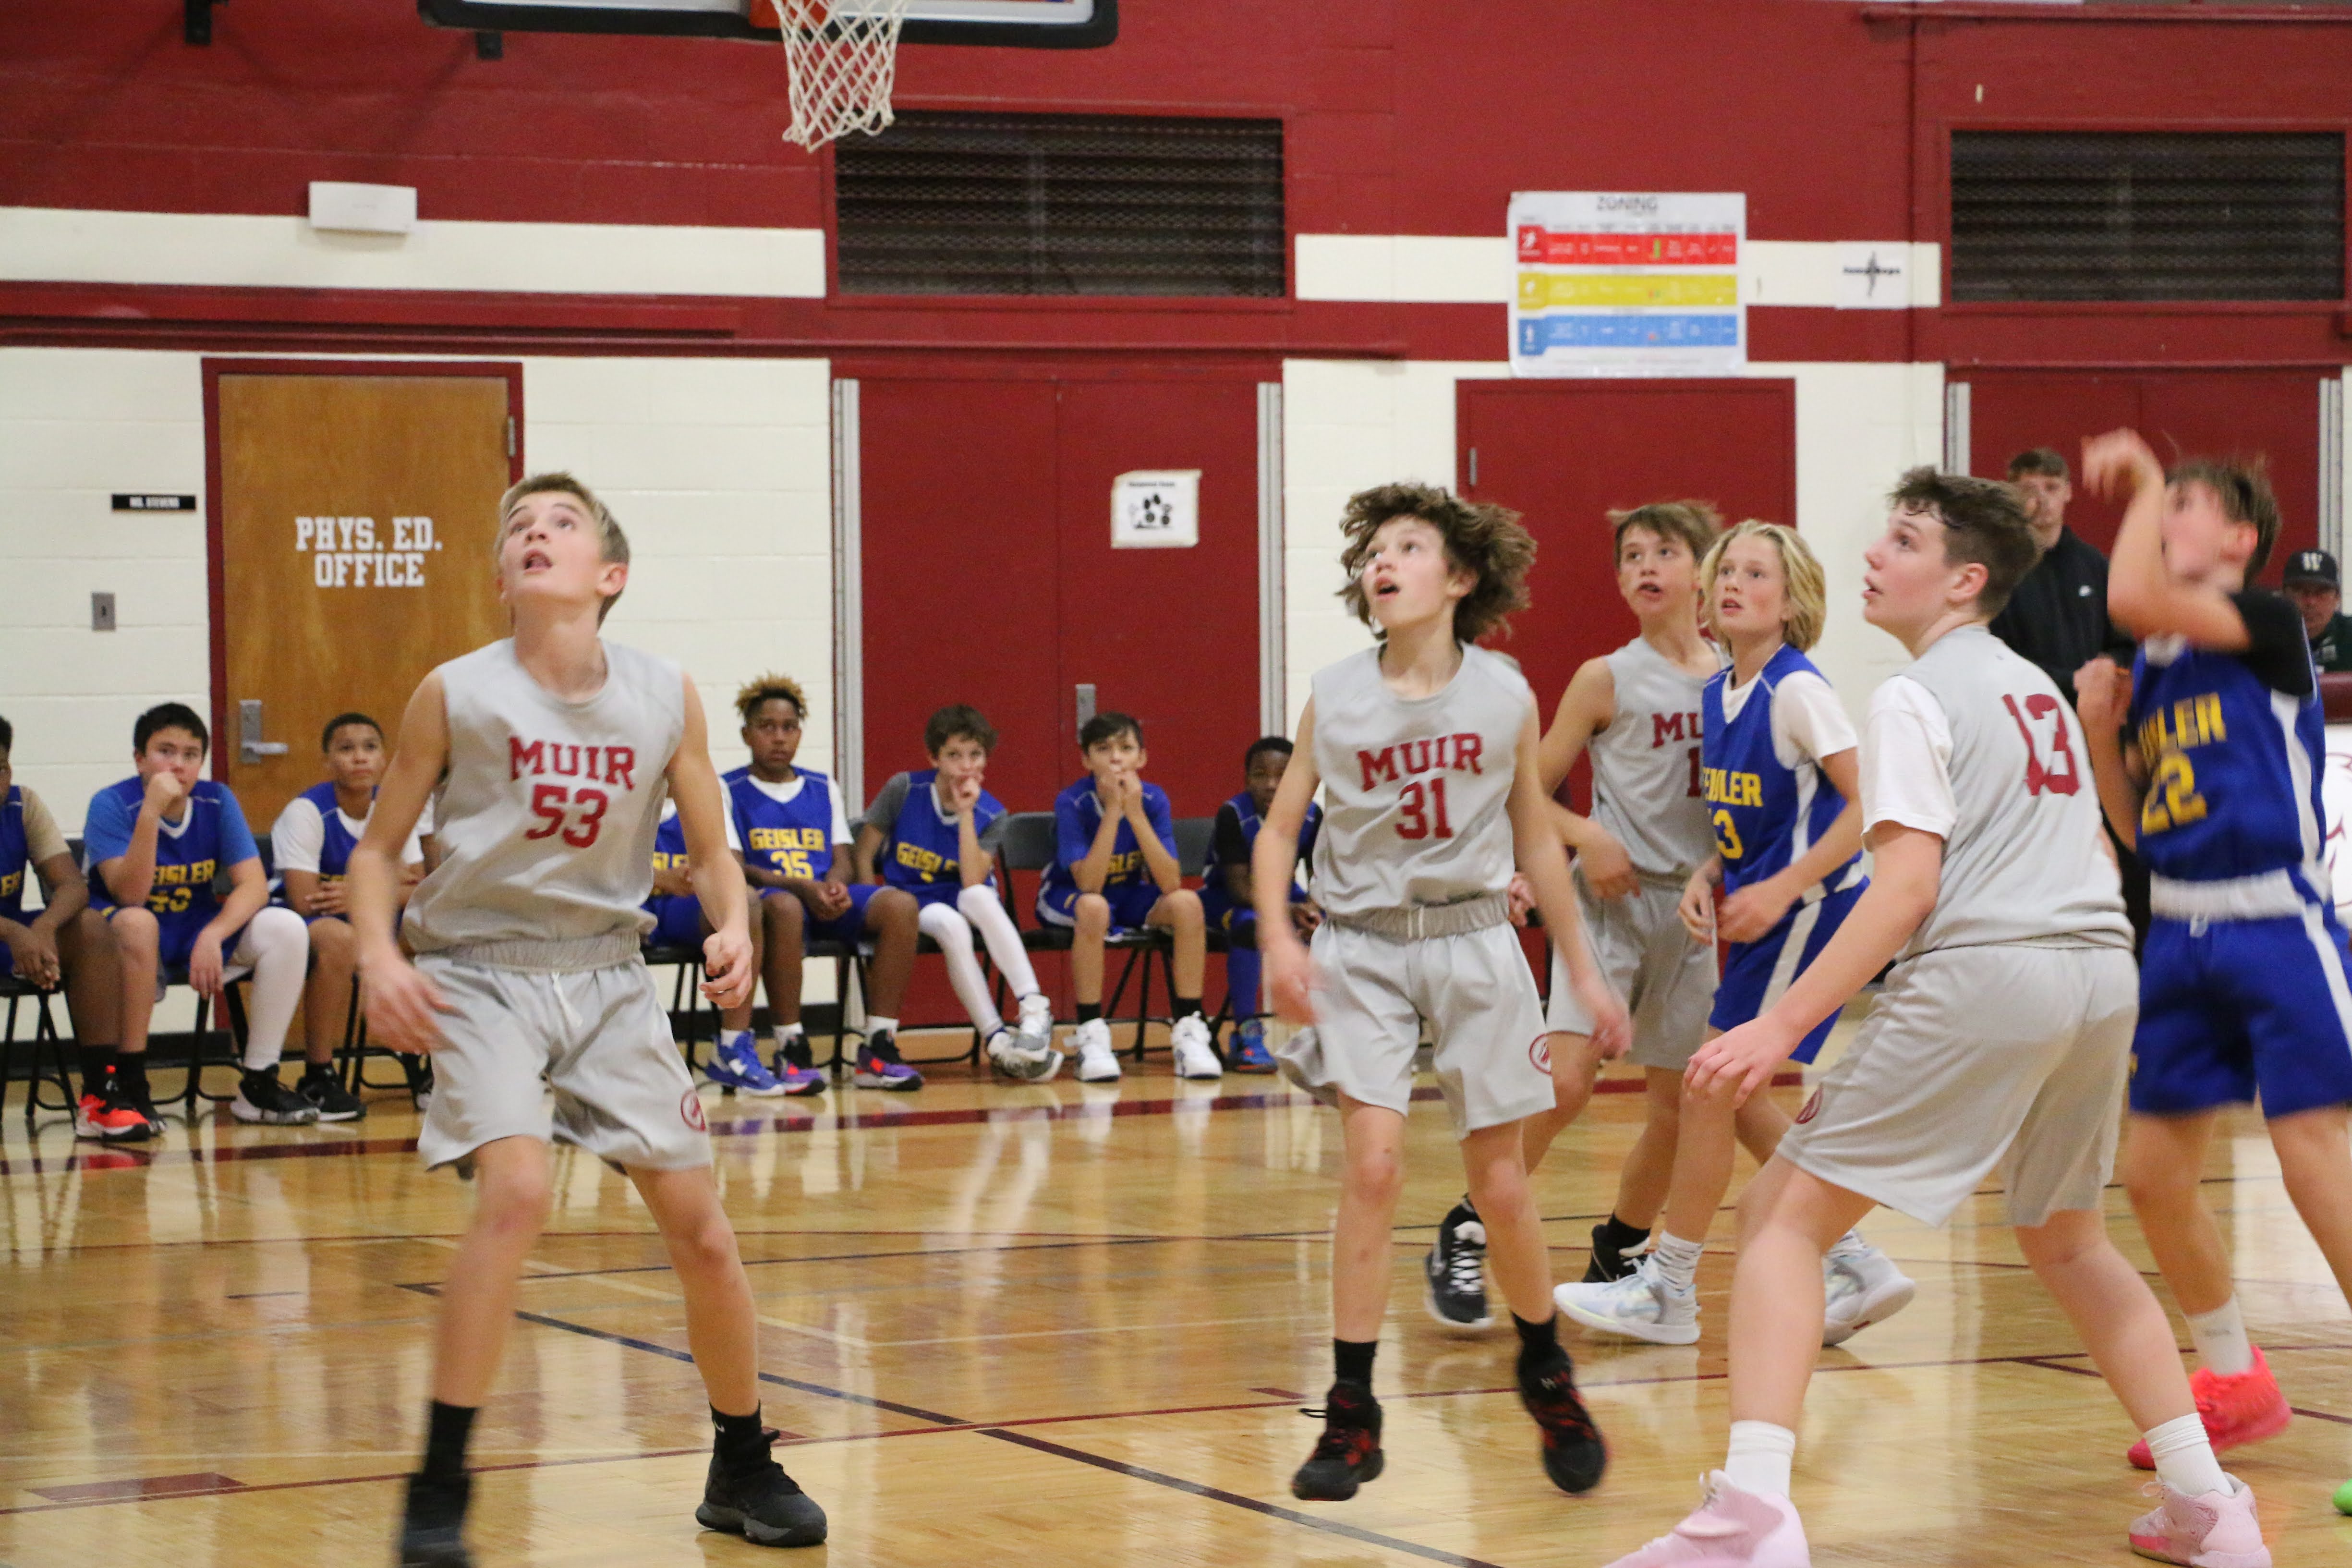 7th grade boys basketball on the court